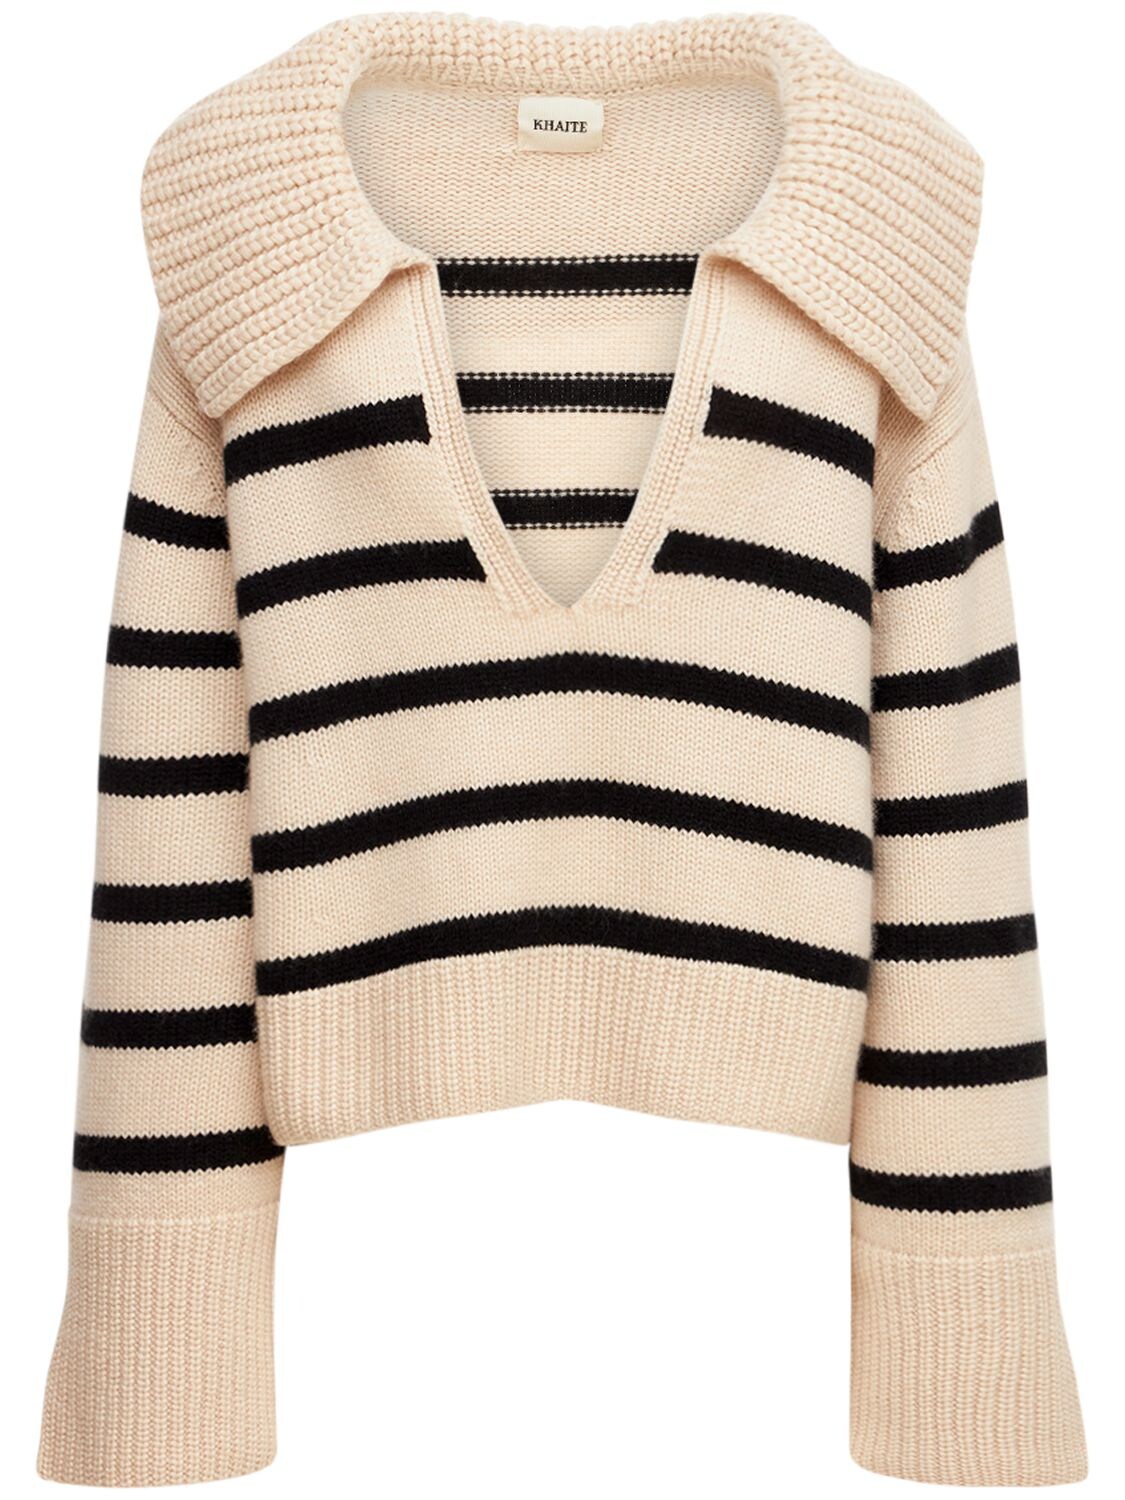 Khaite - Evi cashmere collared sweater - White/Black | Luisaviaroma